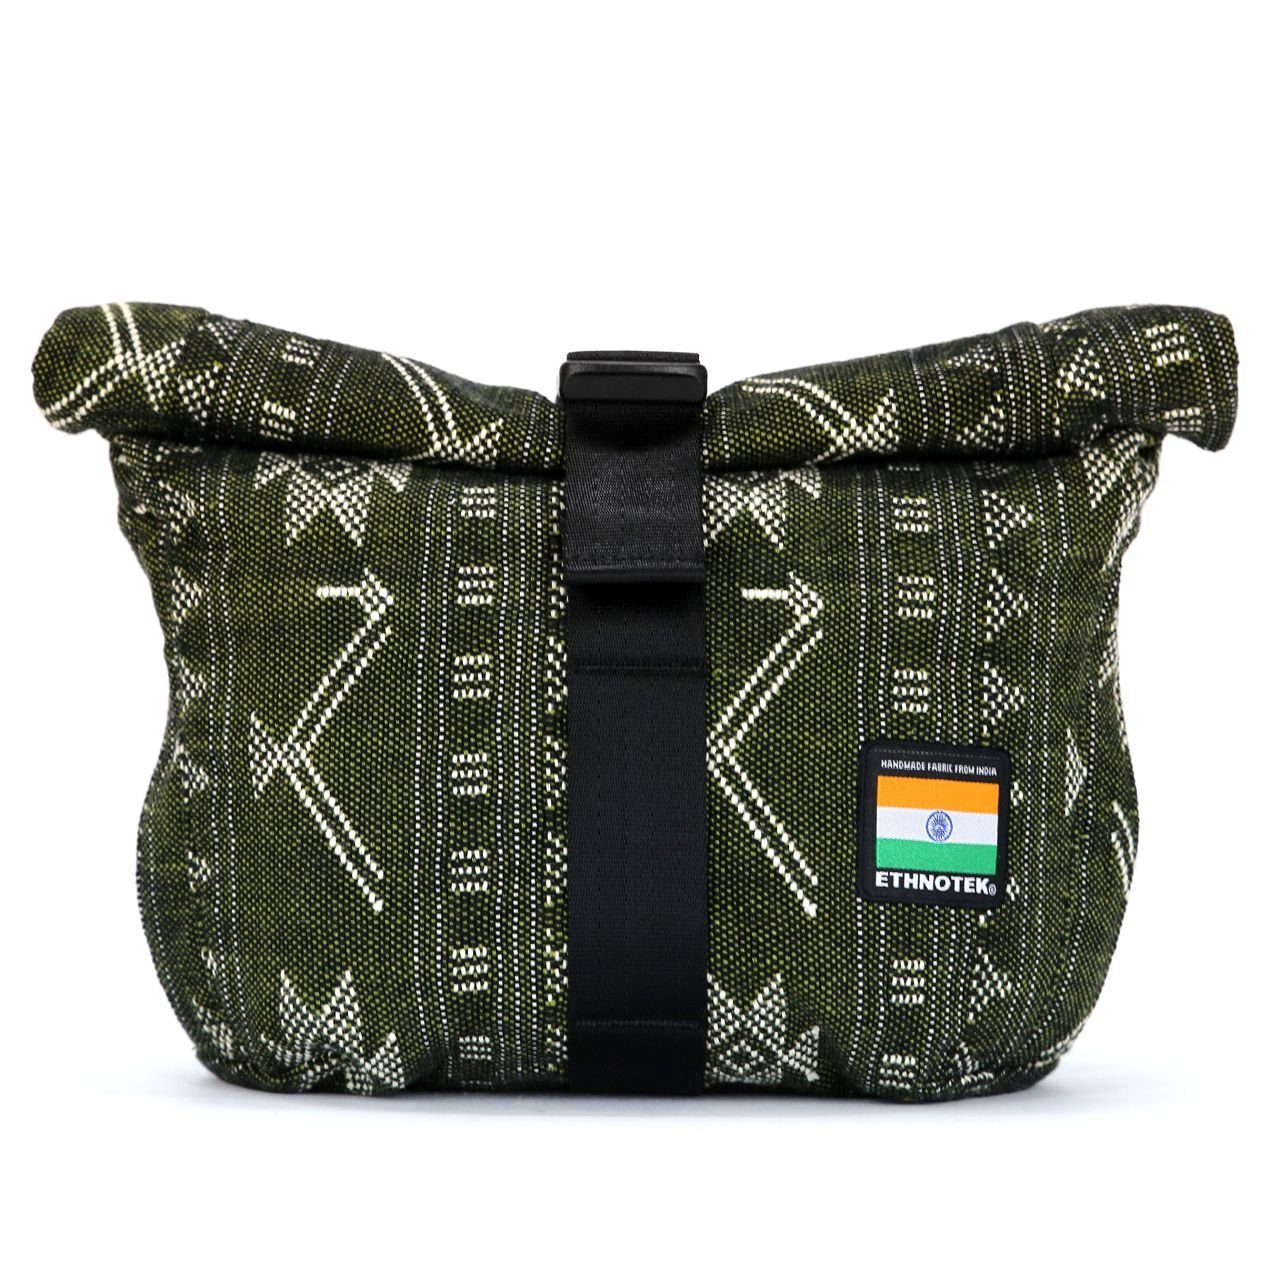 Ethnotek Messenger Bag Cyclo Sling Umhängetasche Classic India 19